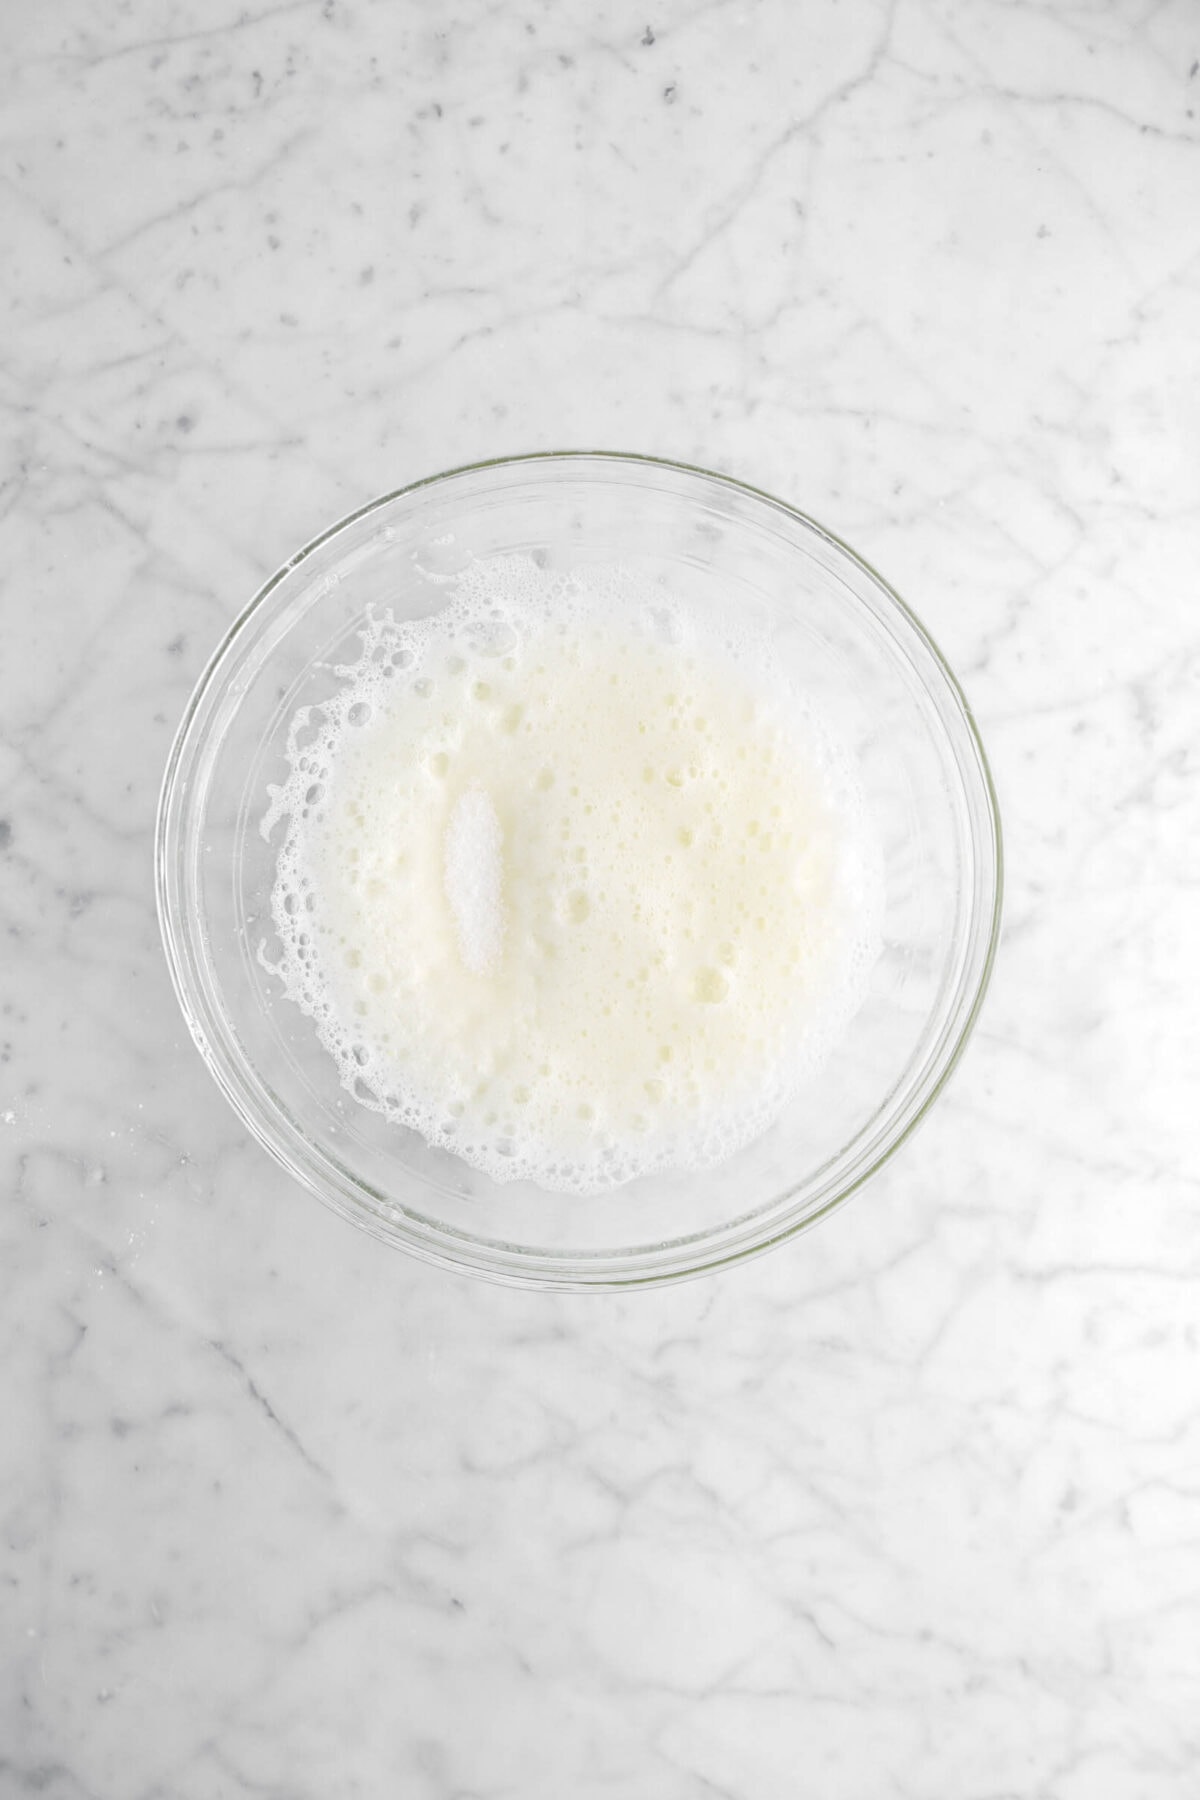 sugar added to foamy egg whites